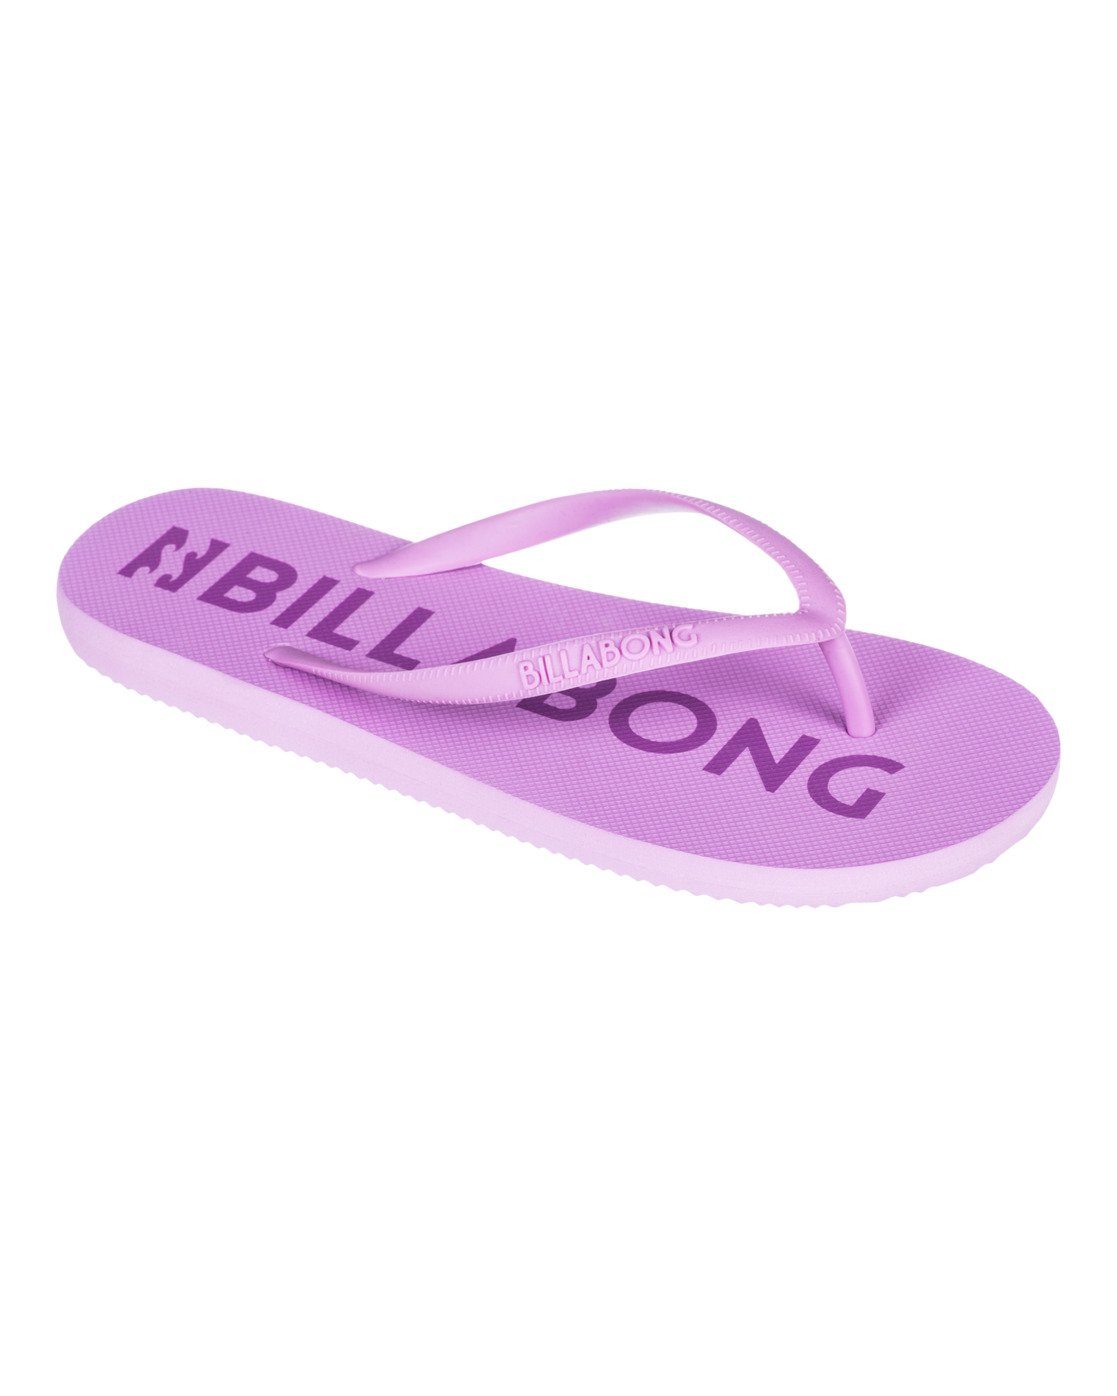 Billabong Sunlight Sandale